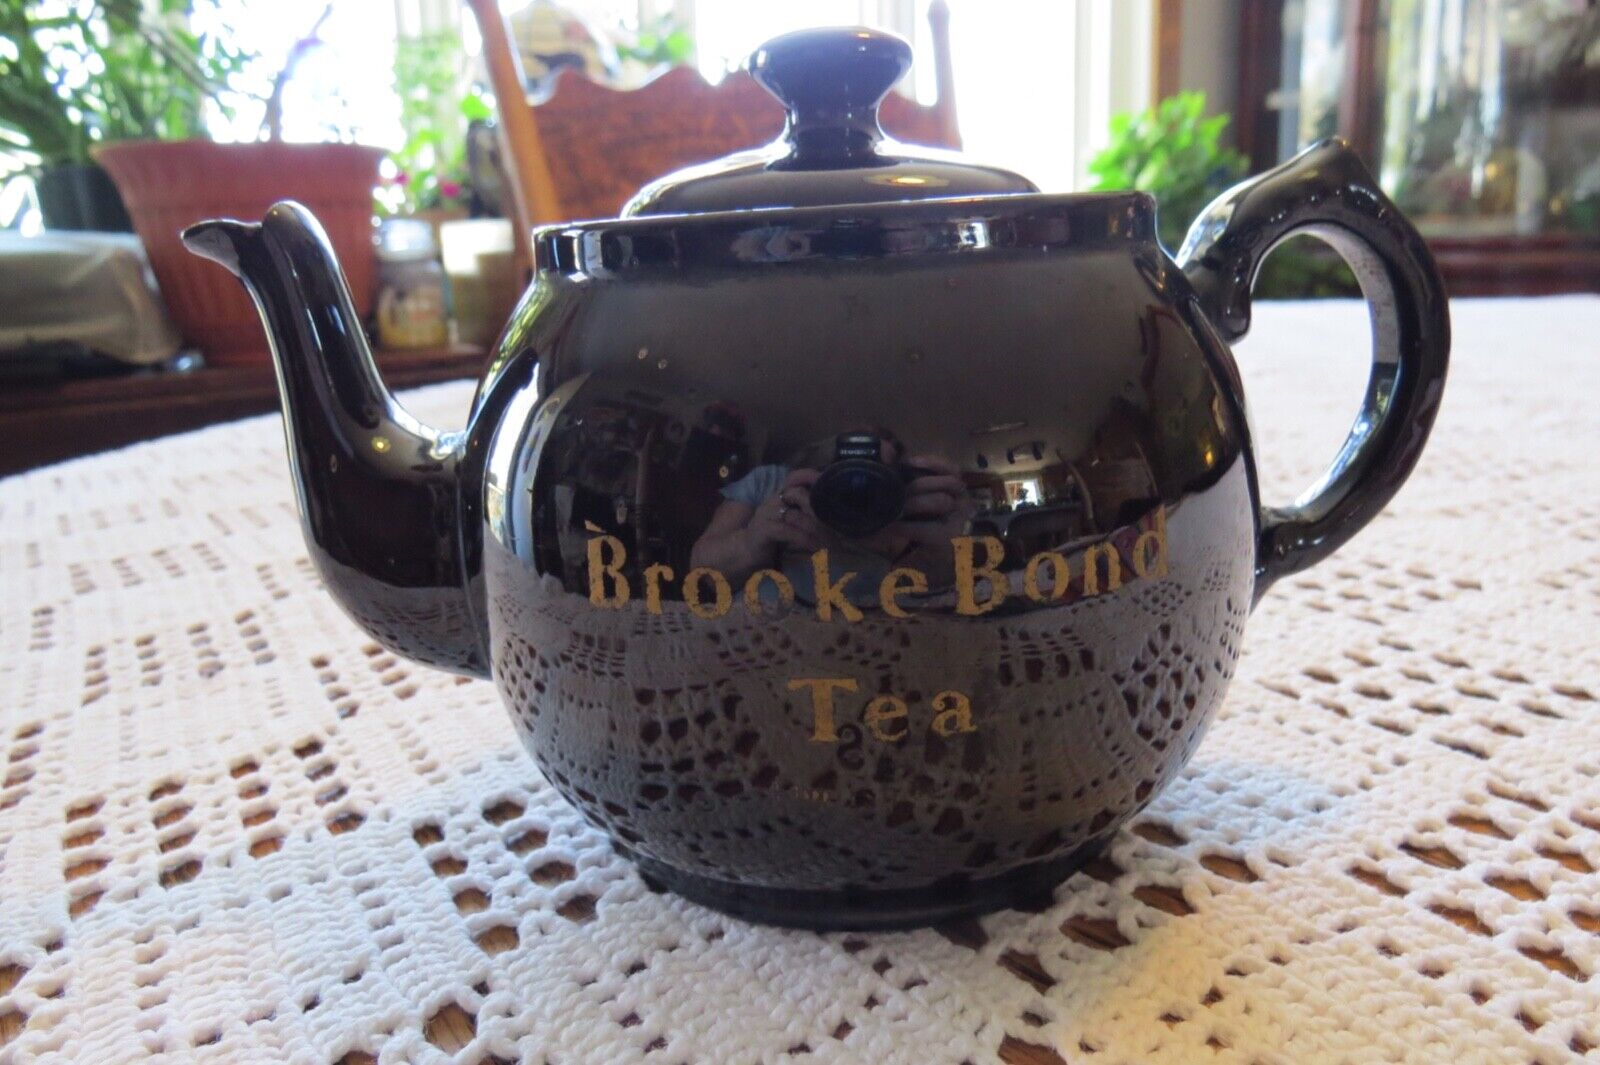 Old/ Vintage Brooke Bond Tea - Ceramic Single Serving Tea Pot